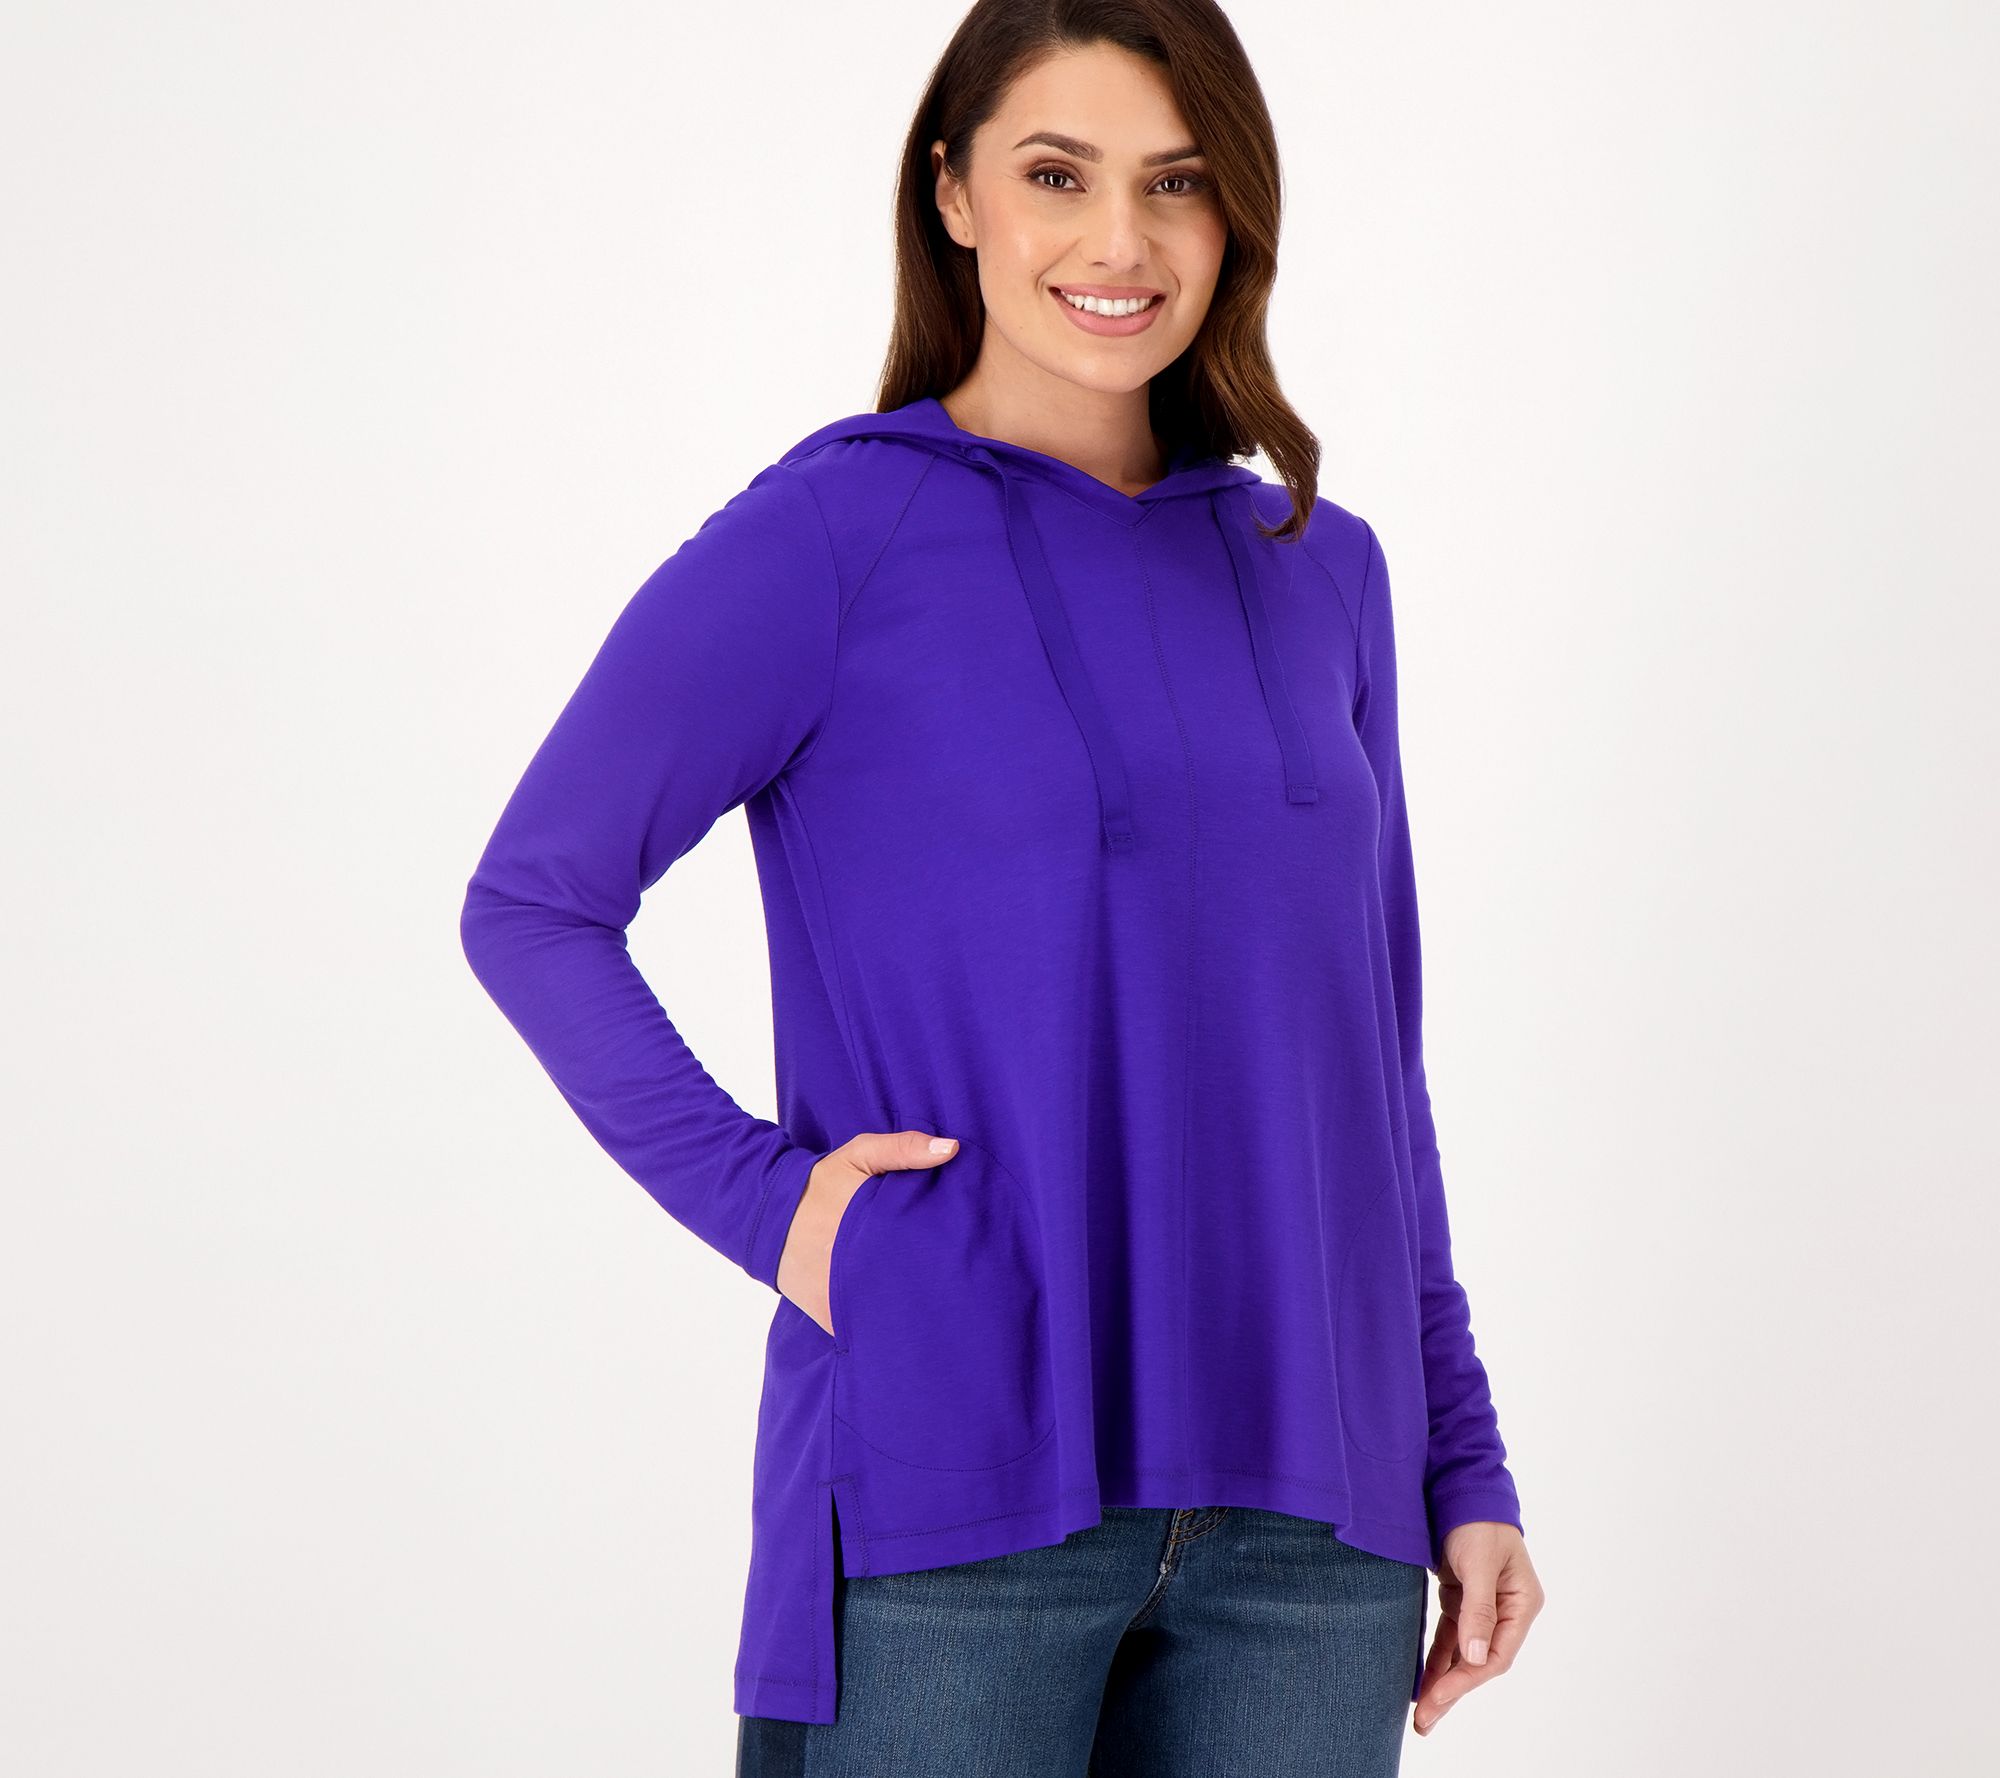 Womens Under Armour size M Purple Semi-fitted Hoodie Sweatshirt